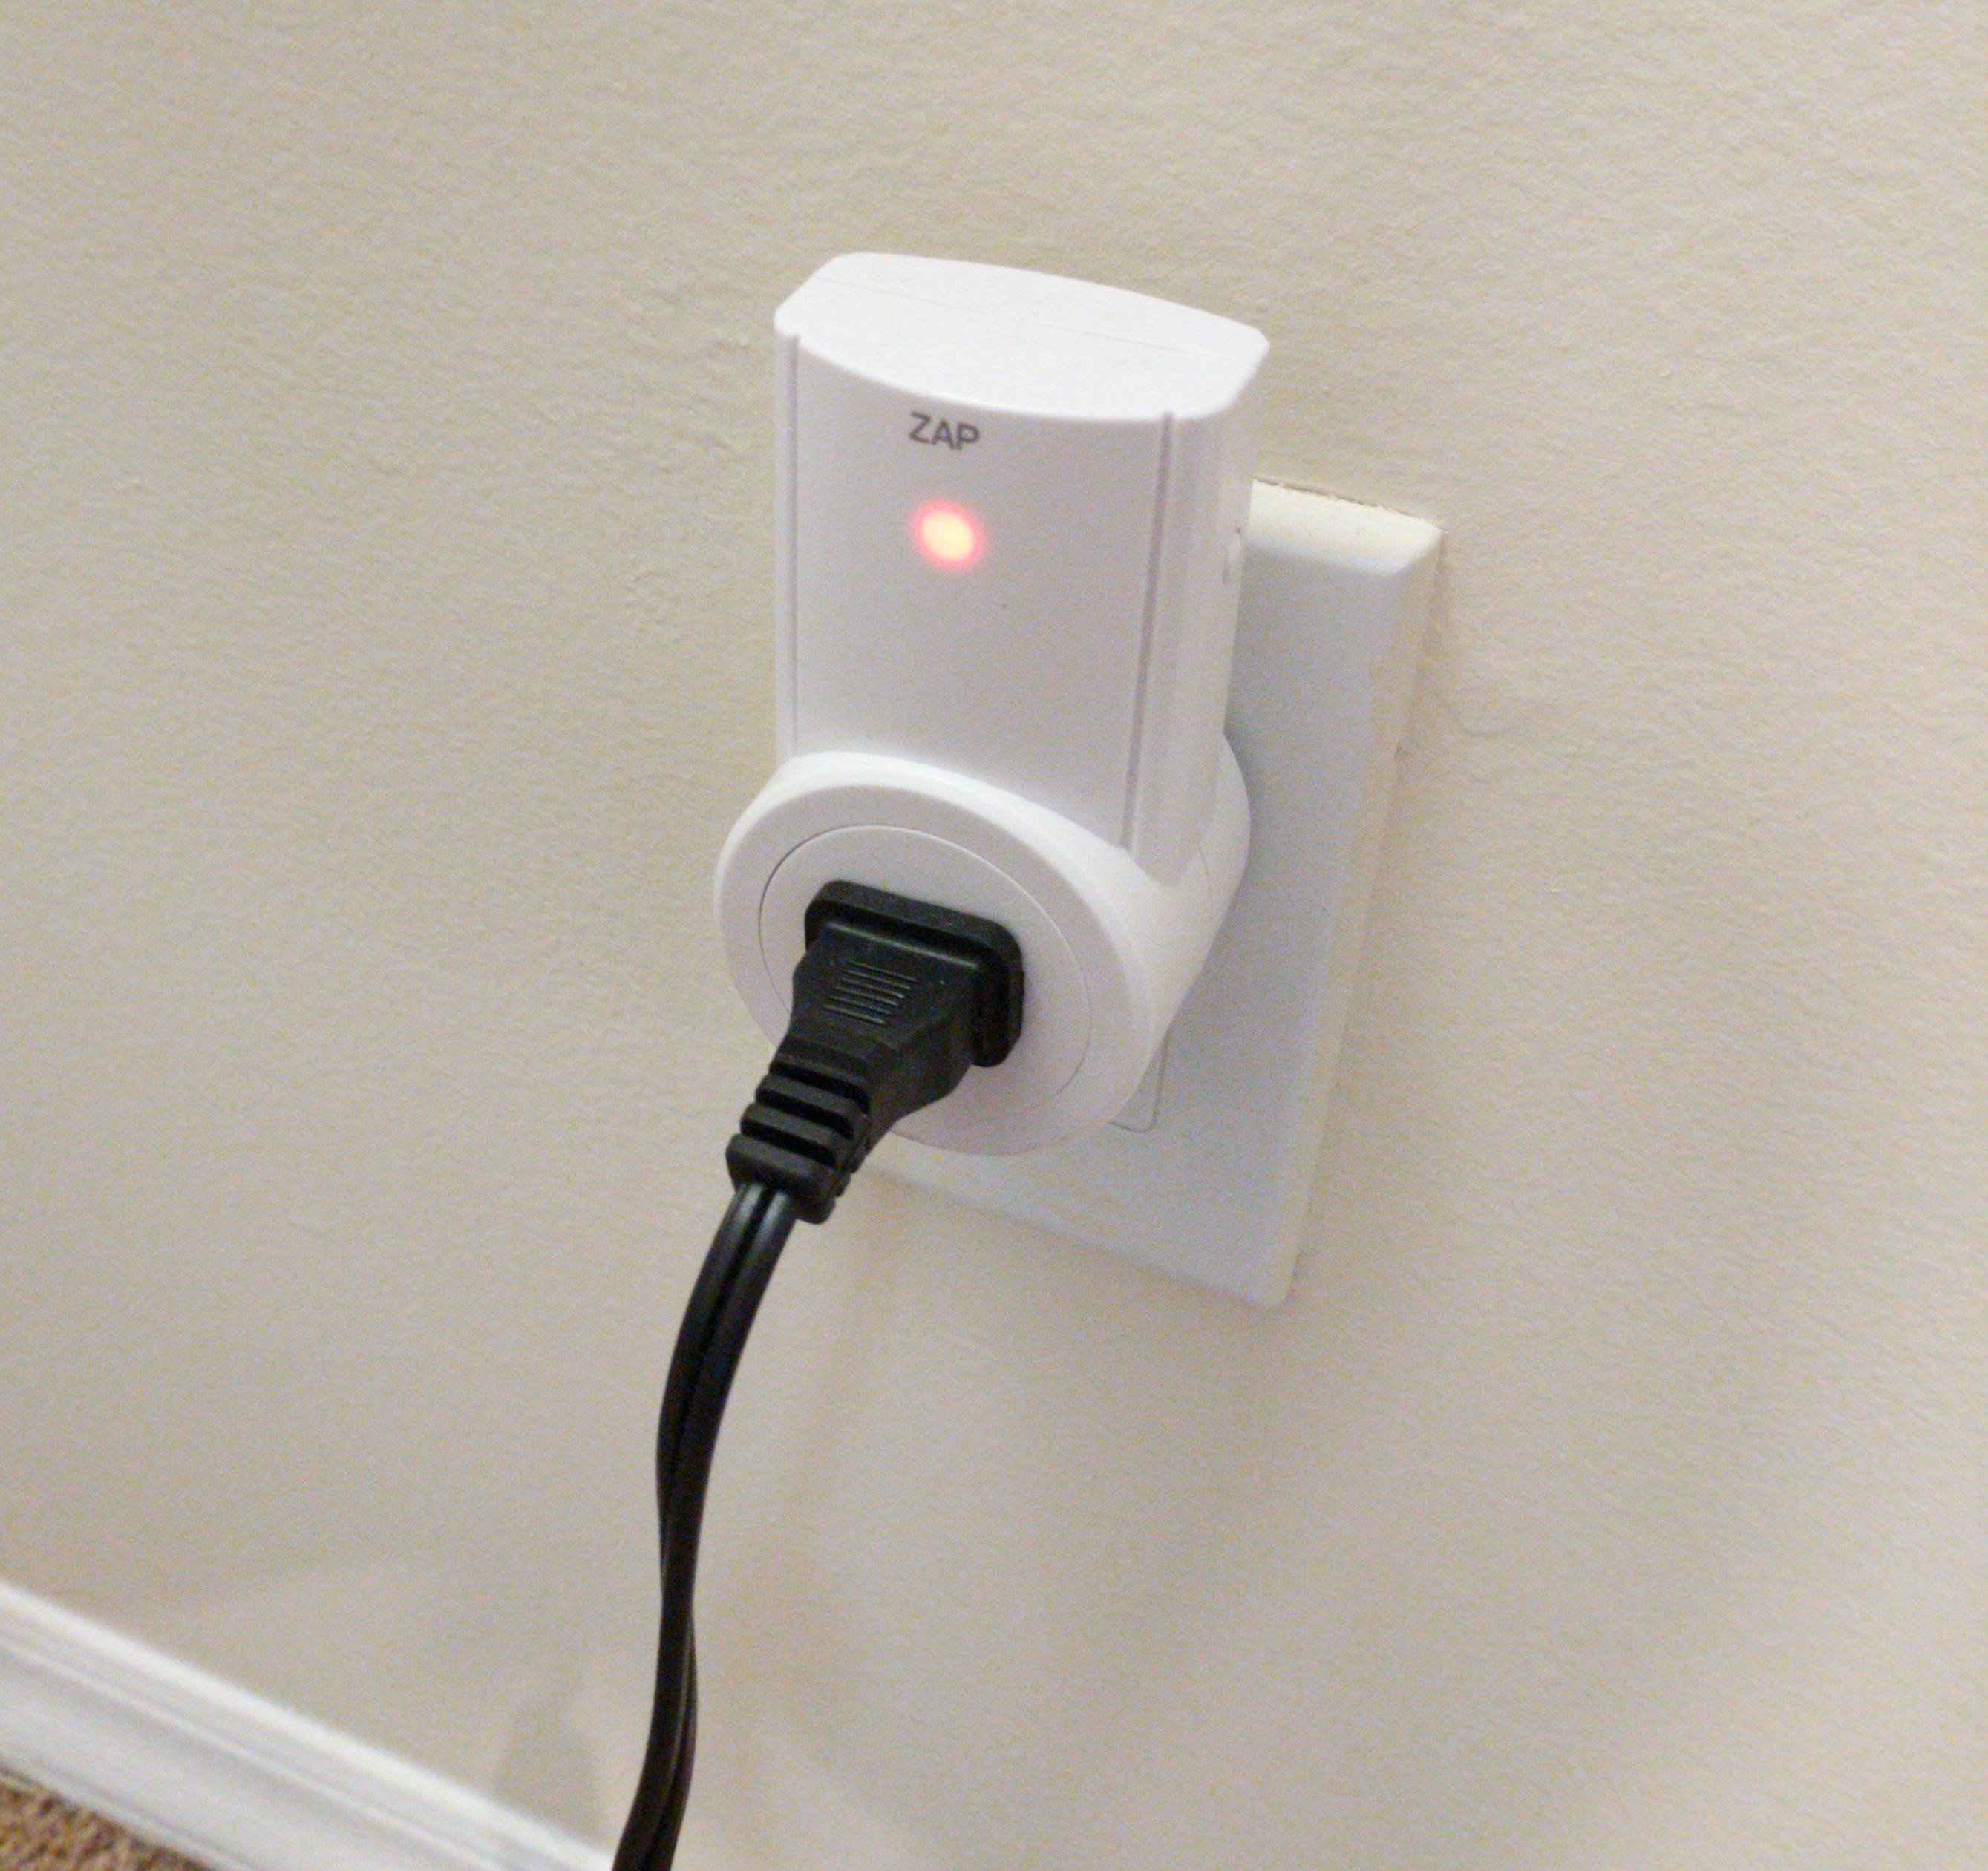 An RF outlet